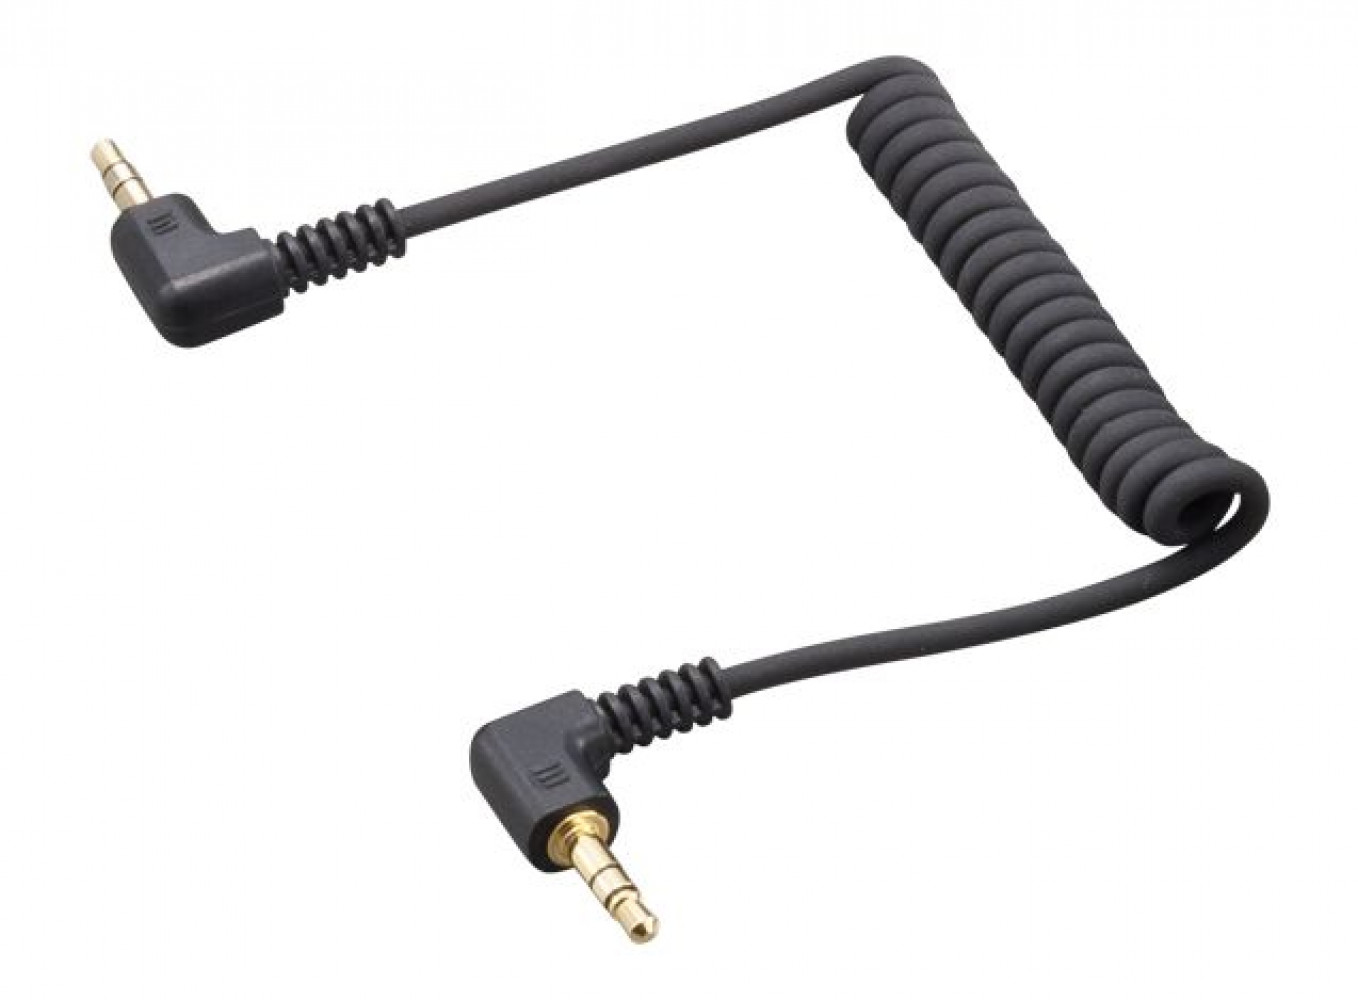 Zoom SMC-1 Stereo Mini Cable for DSLR Cameras